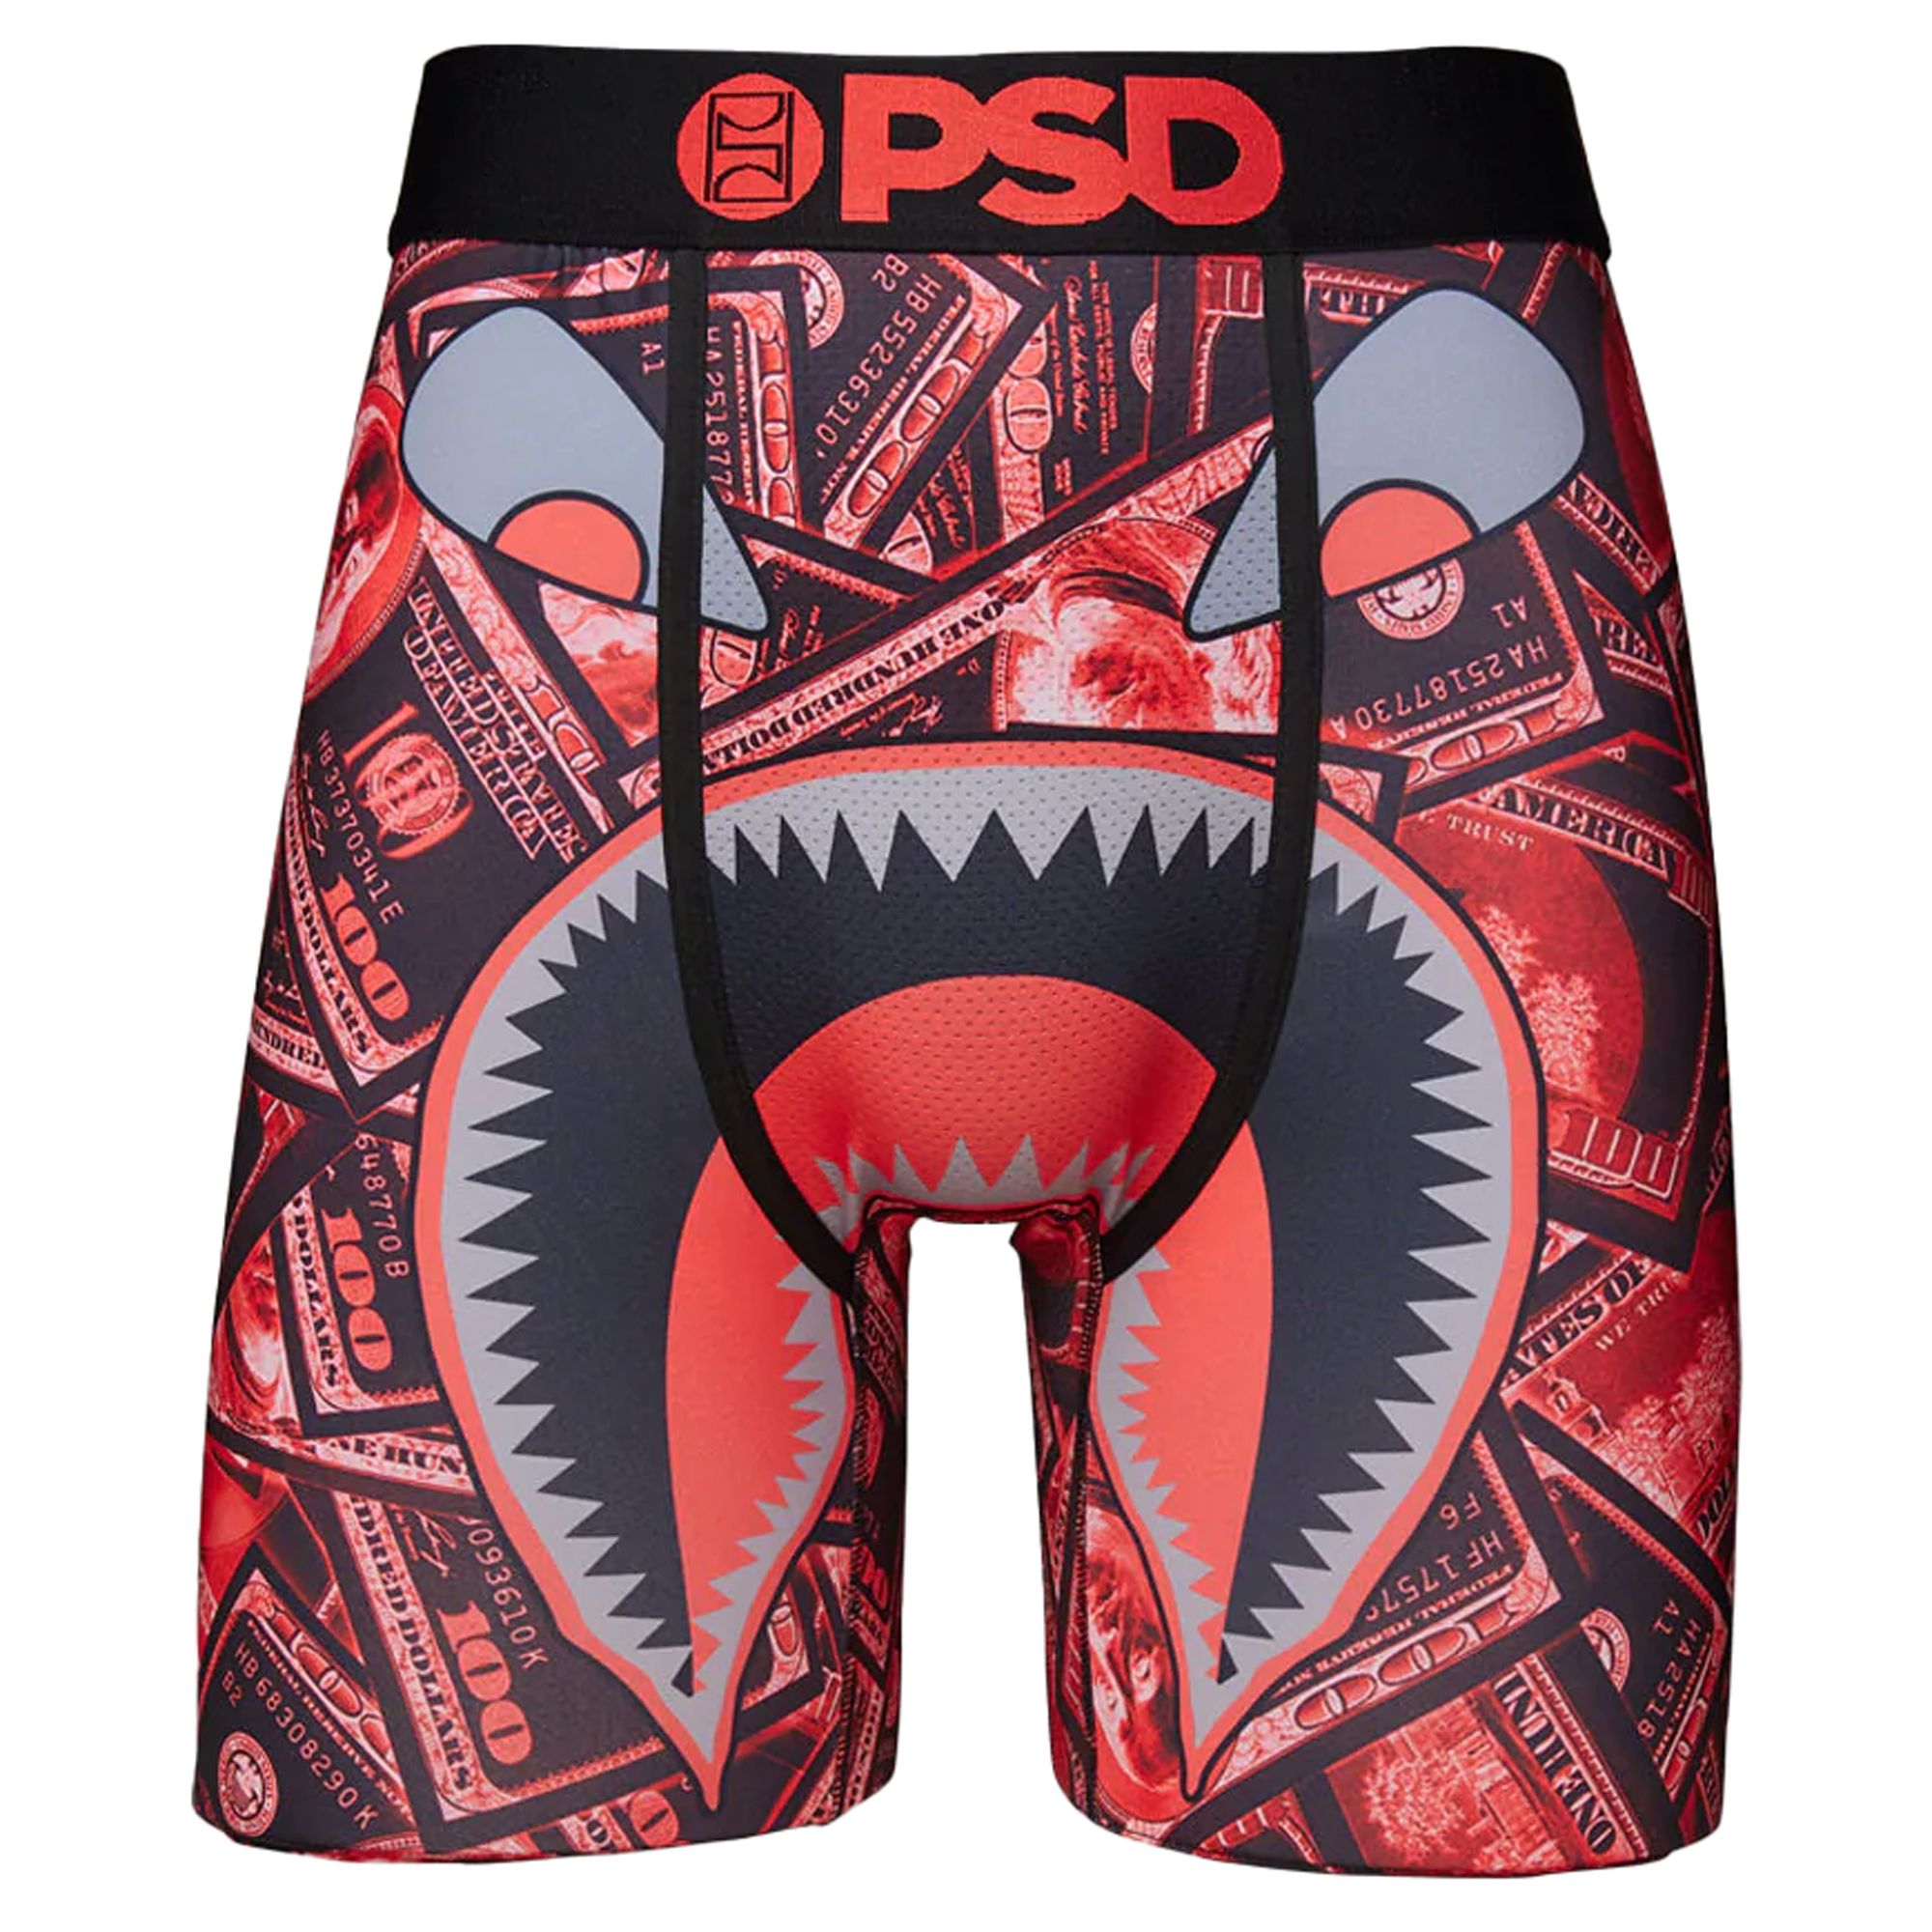 PSD Underwear Women's Warface Athletic Fit Boy Short with Wide